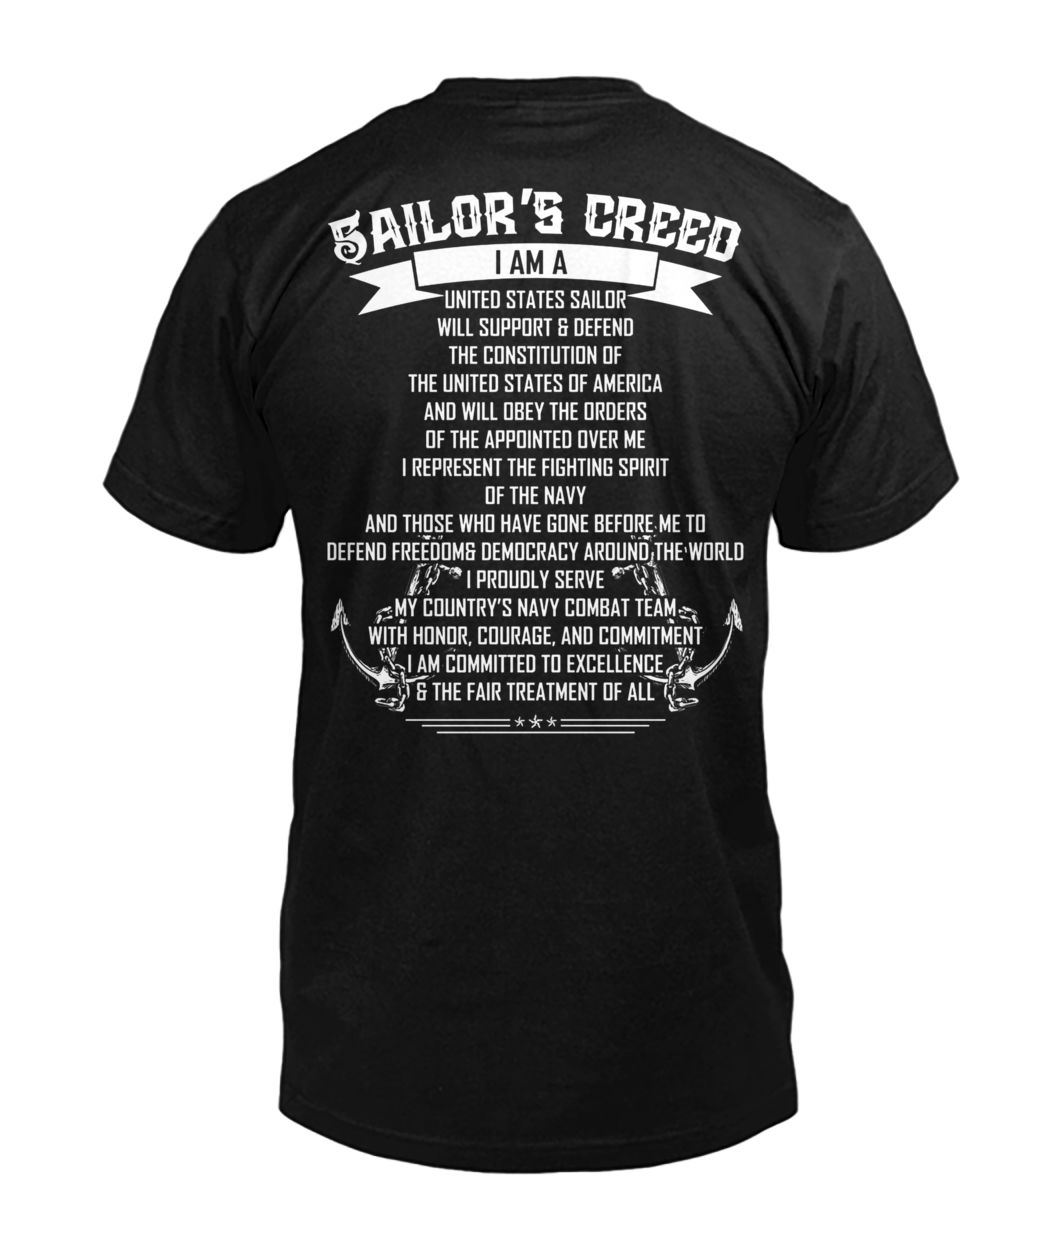 Sailor's creed I am a united states sailor mens v-neck